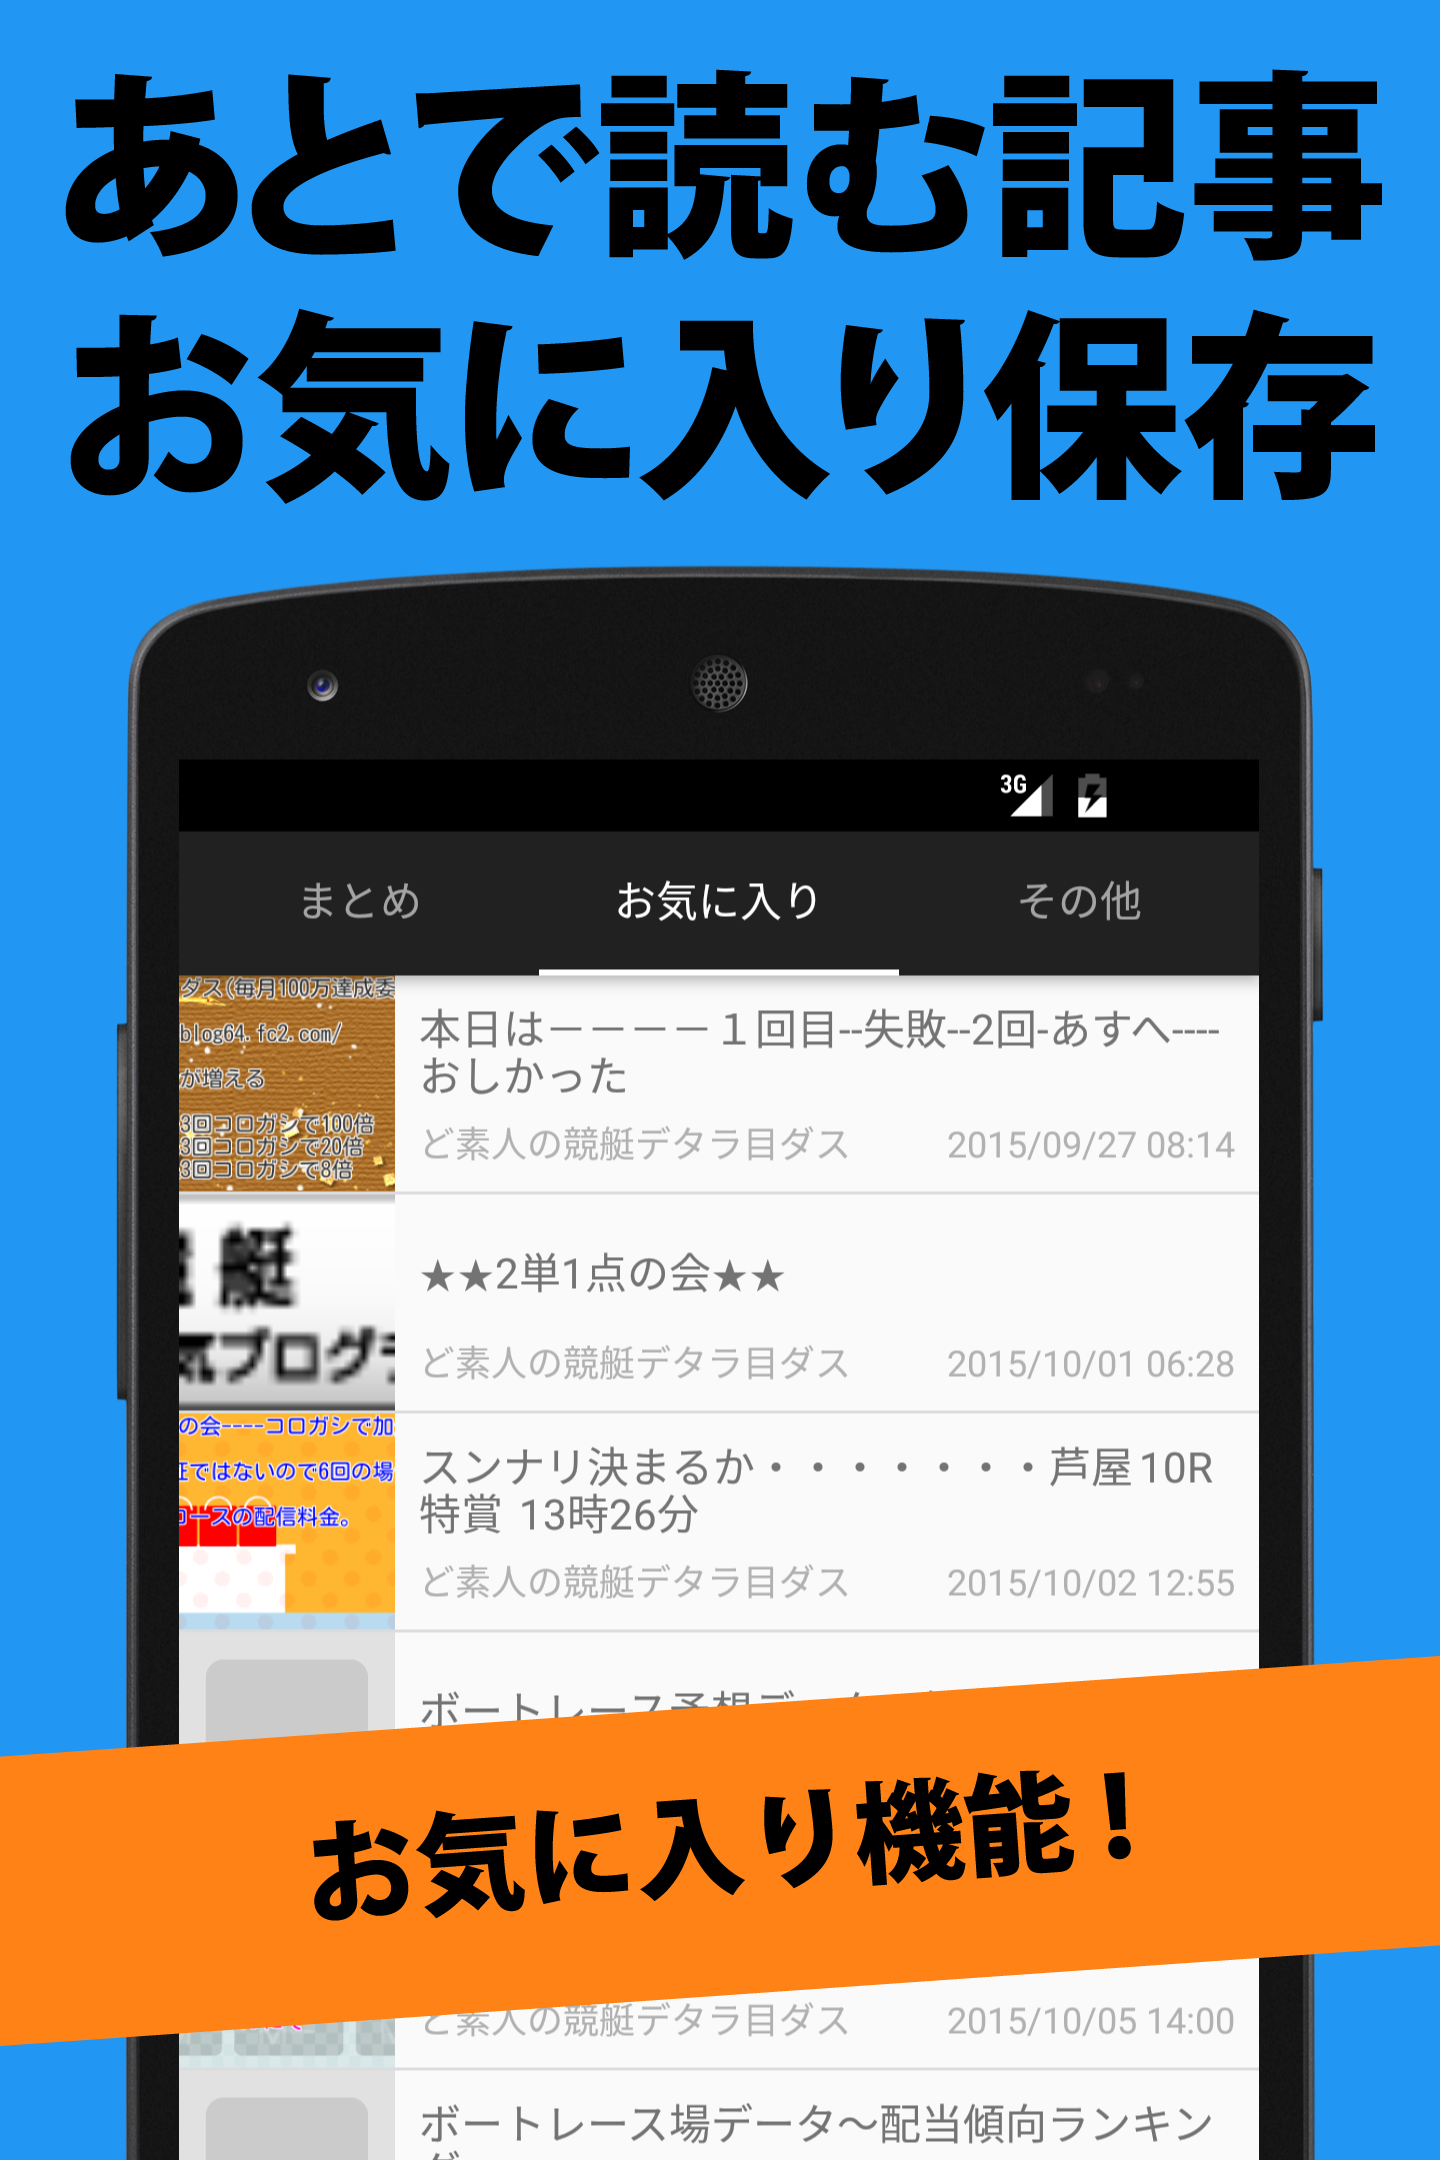 Android application 競艇まとめ for ボートレース screenshort